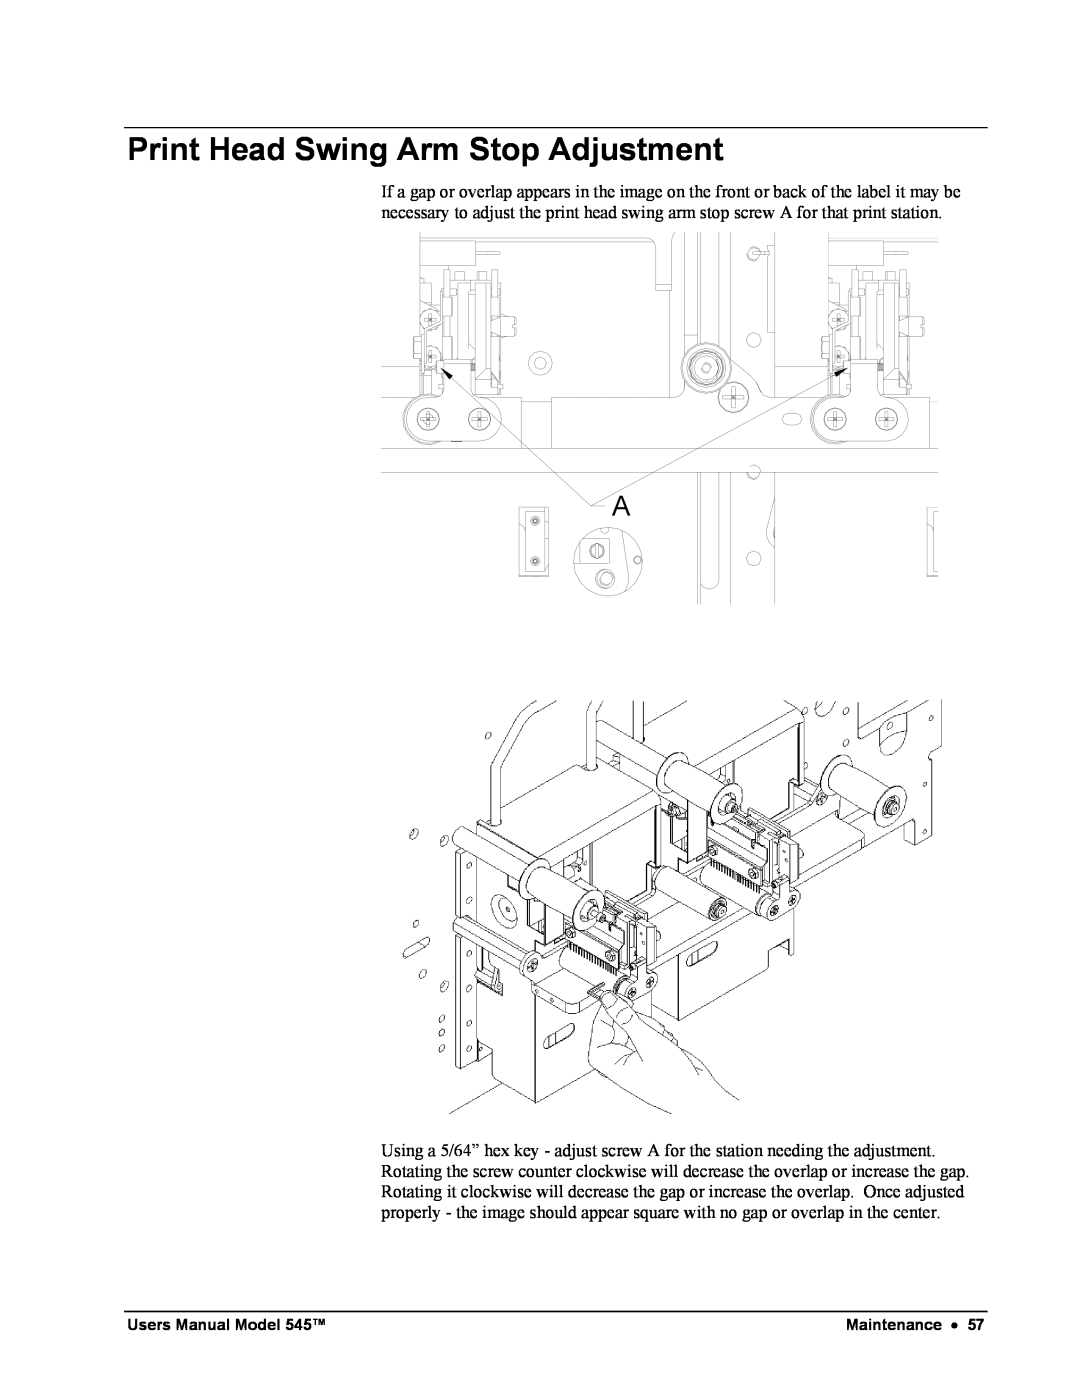 Paxar 545 user manual Print Head Swing Arm Stop Adjustment 